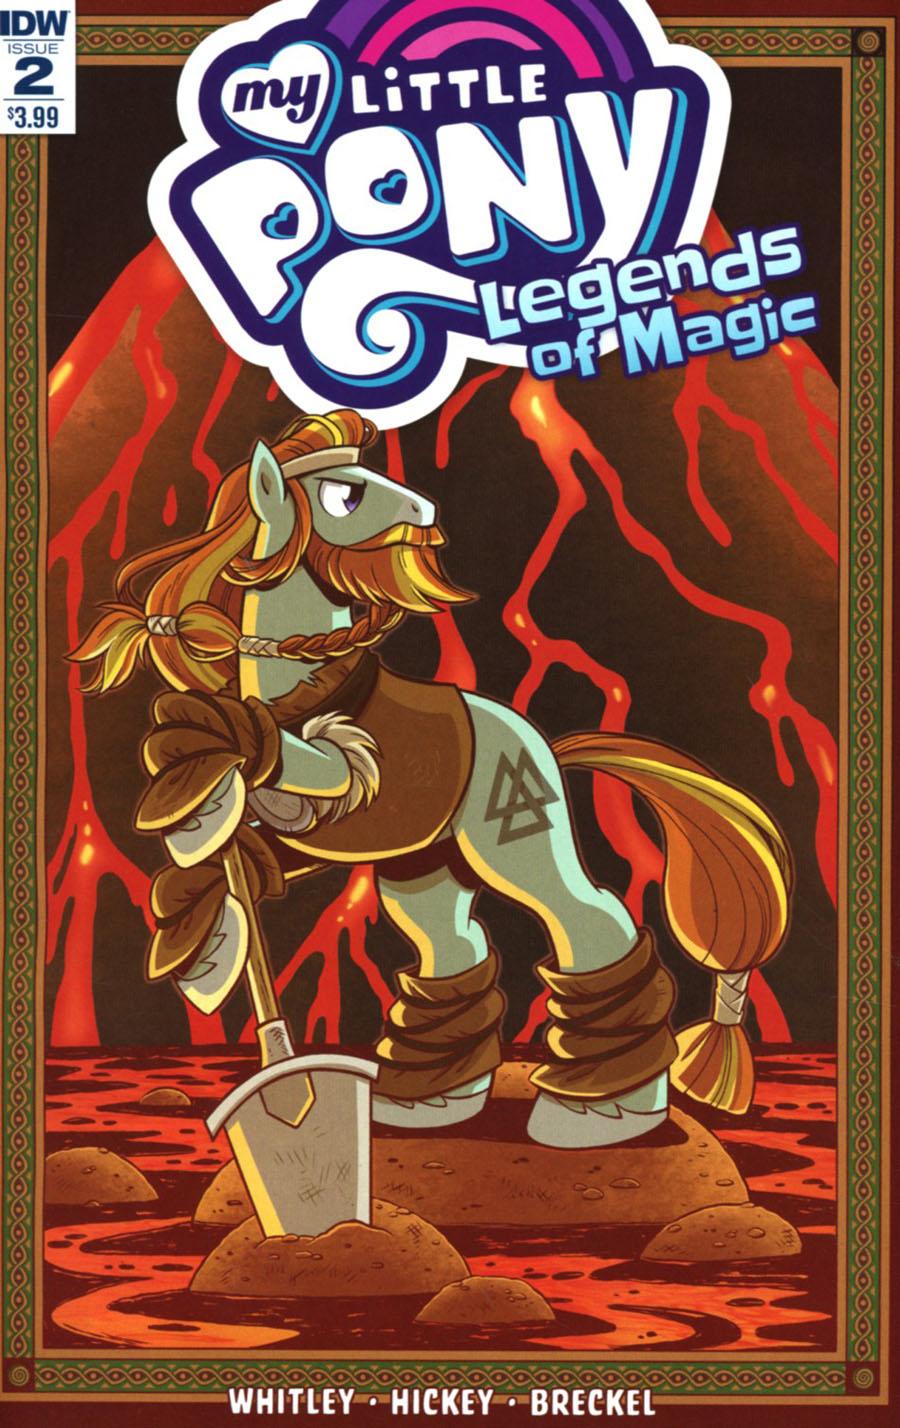 My Little Pony Legends Of Magic Vol. 1 #2